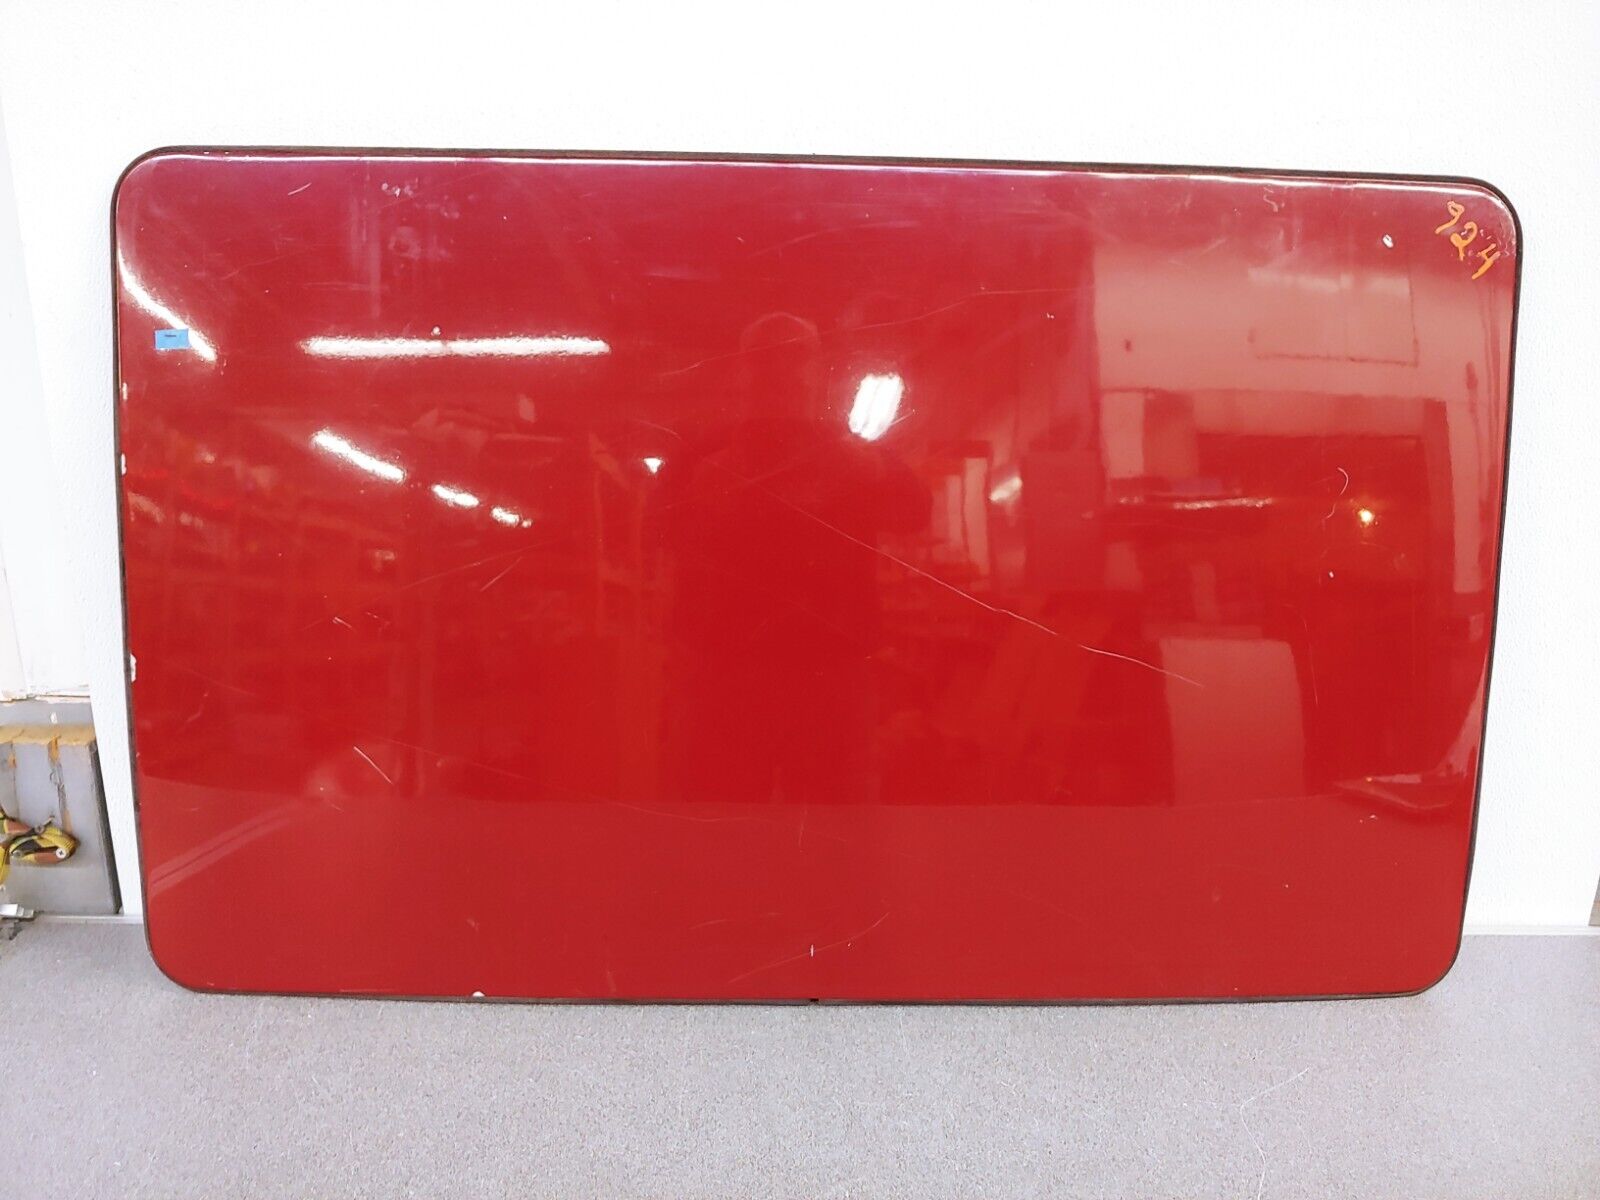 USED ORIGINAL GENUINE PORSCHE 924 944 SUNROOF RED FIBERGLASS PANEL 1976-83 #1